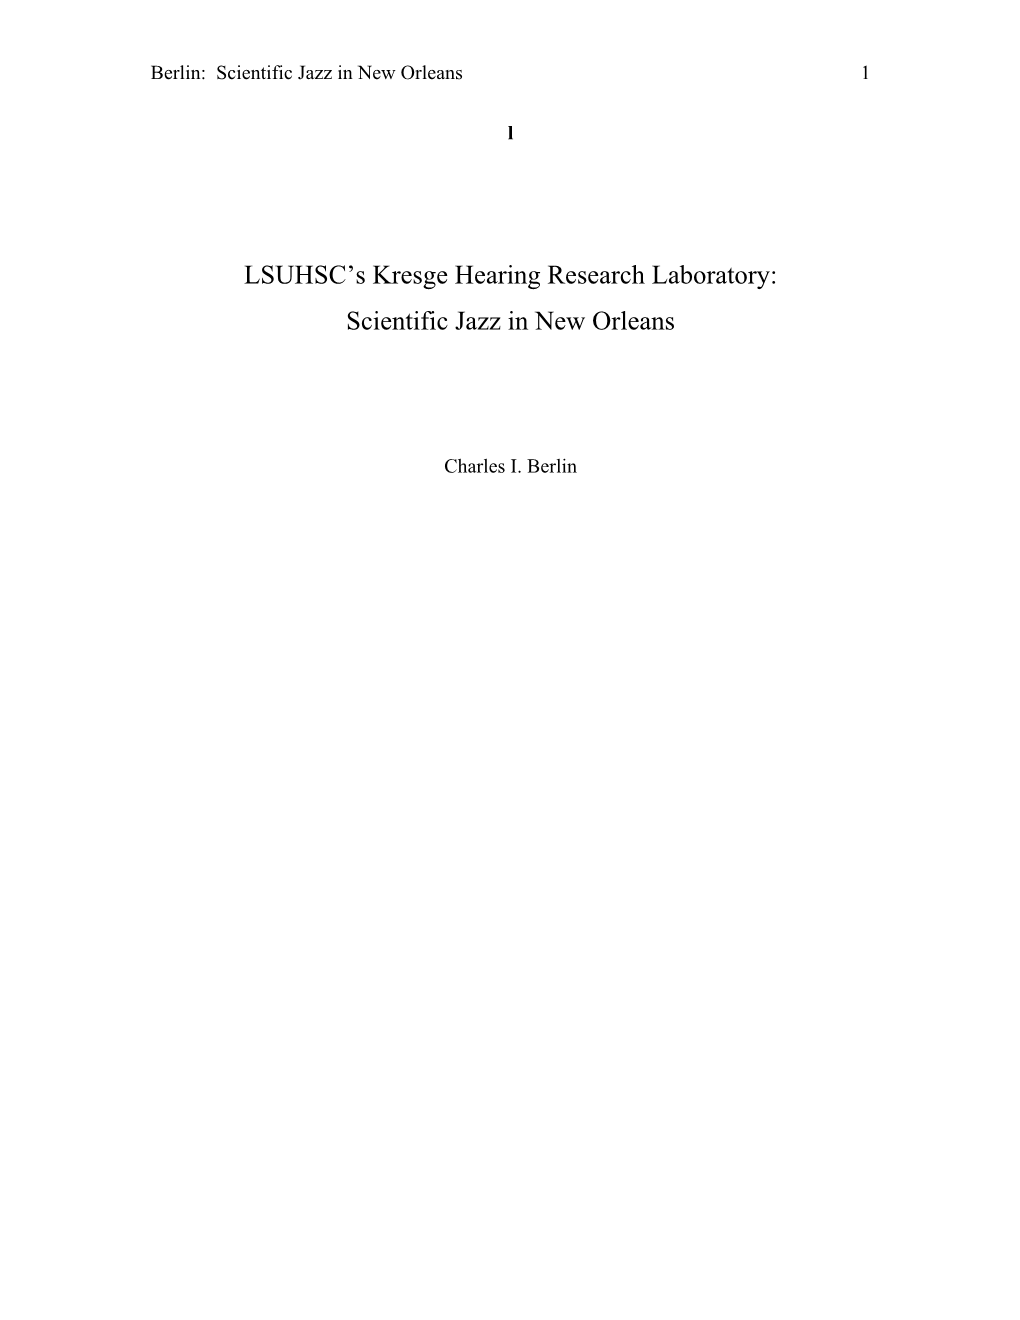 LSUHSC's Kresge Hearing Research Laboratory: Scientific Jazz in New